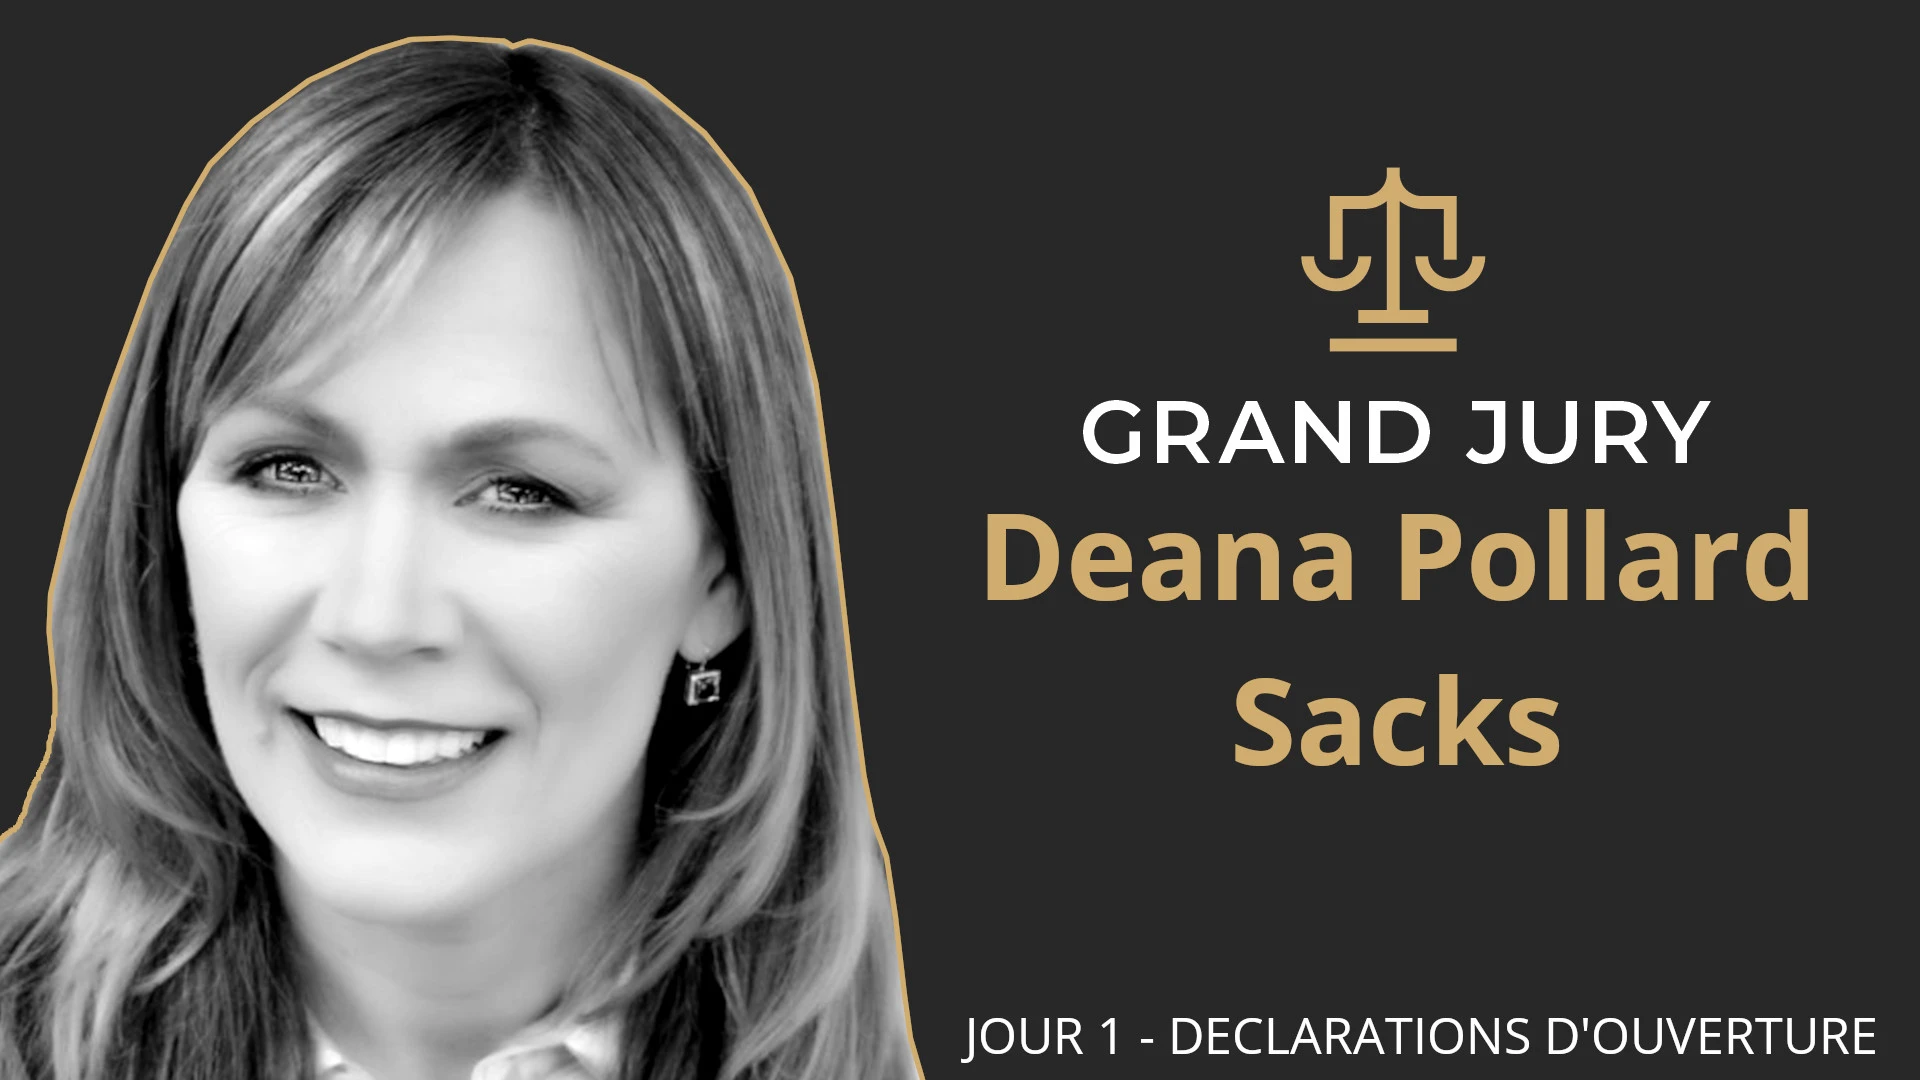 Deana Pollard Sacks / Jour 1 – Grand Jury